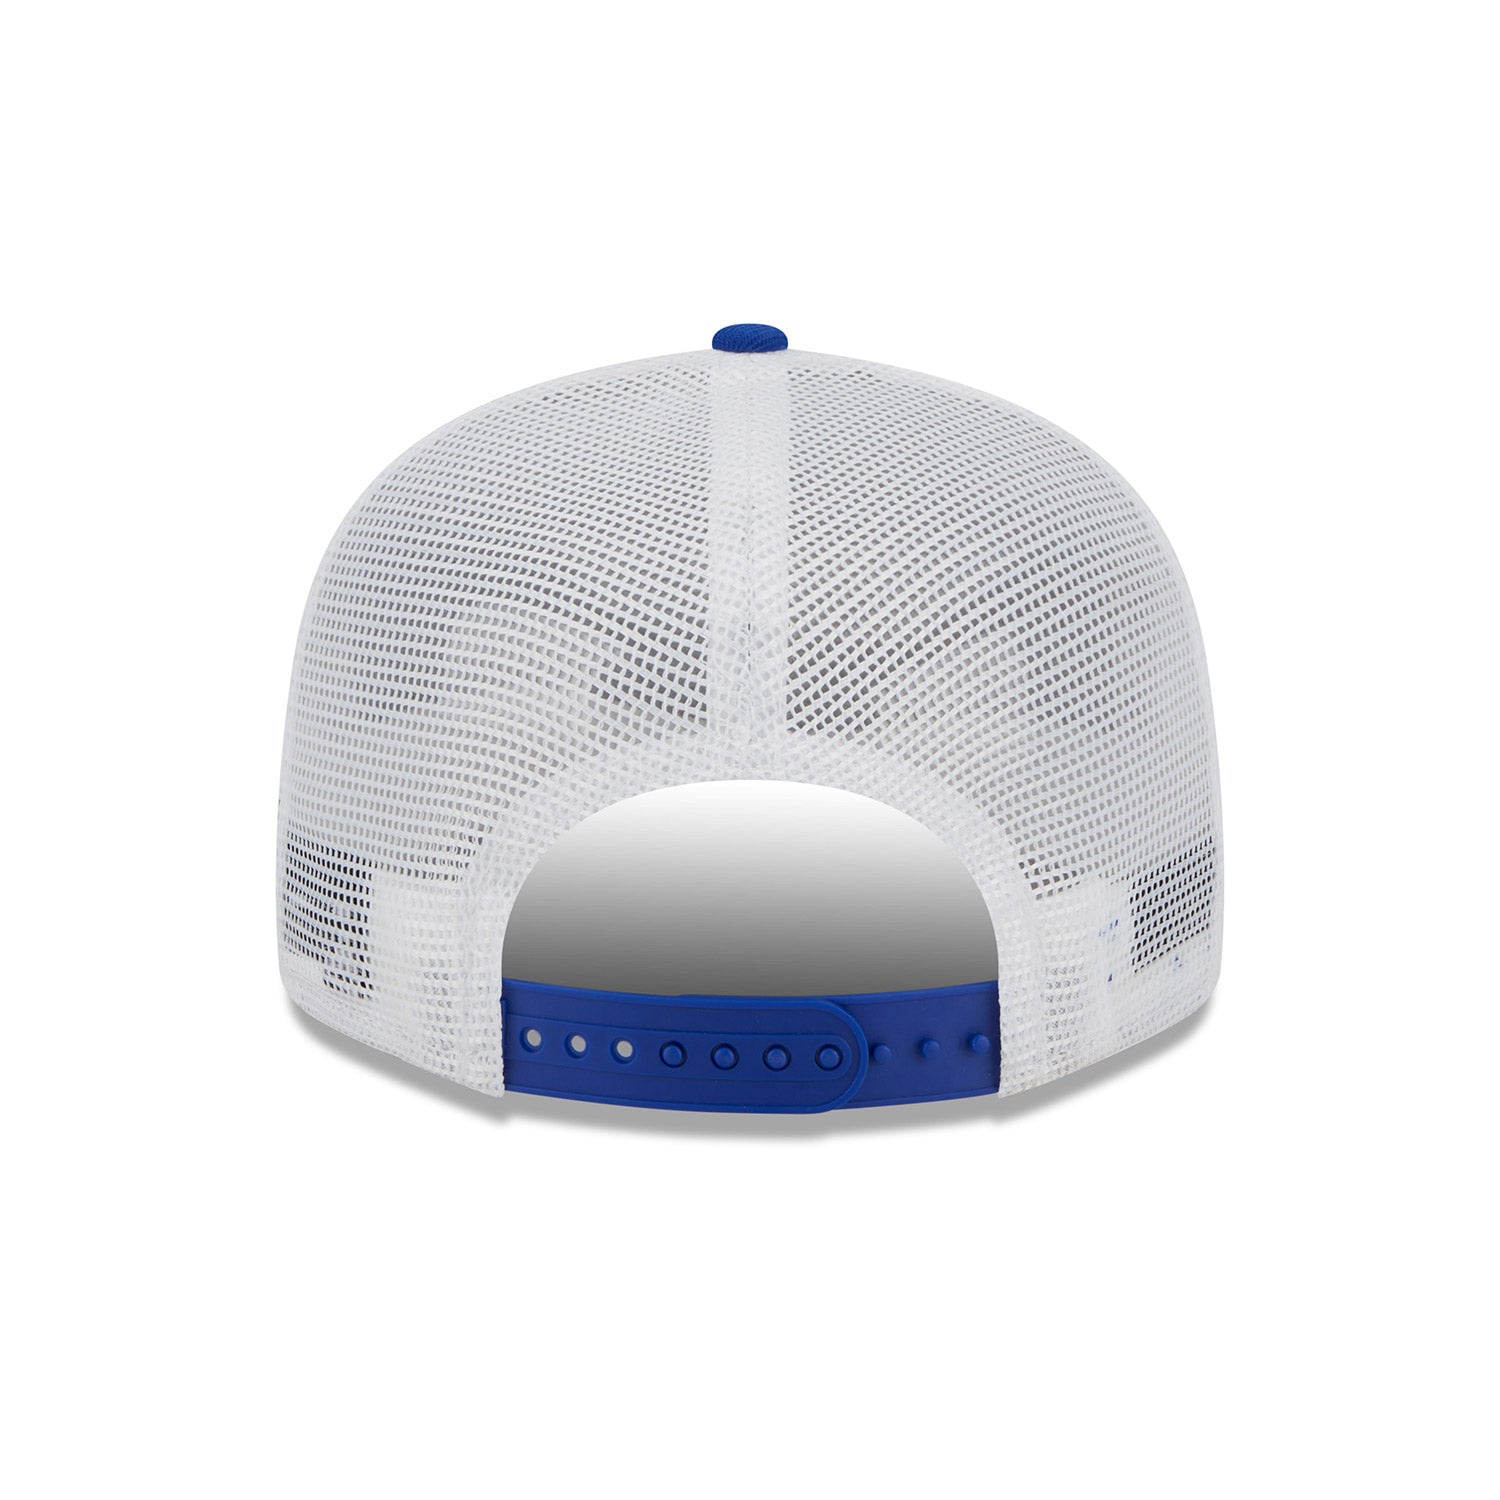 New Era Knicks Golf Club Meshback Snapback Hat In Blue & White - Back View